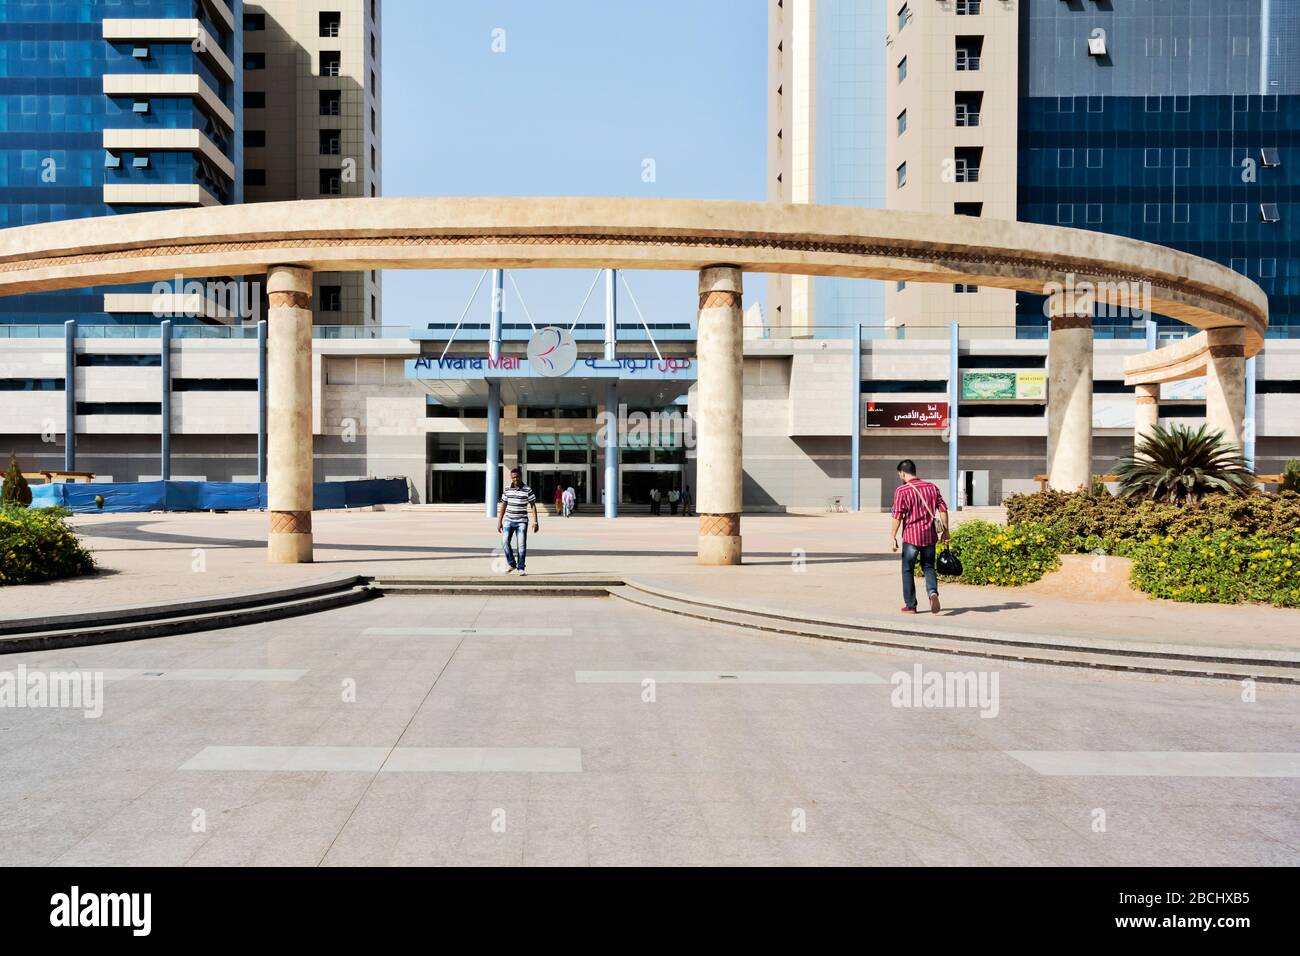 Khartoum, Sudan - January 30, 2015: View at the people entering the modern building, shopping mall in Khartoum, Sudan. Stock Photo